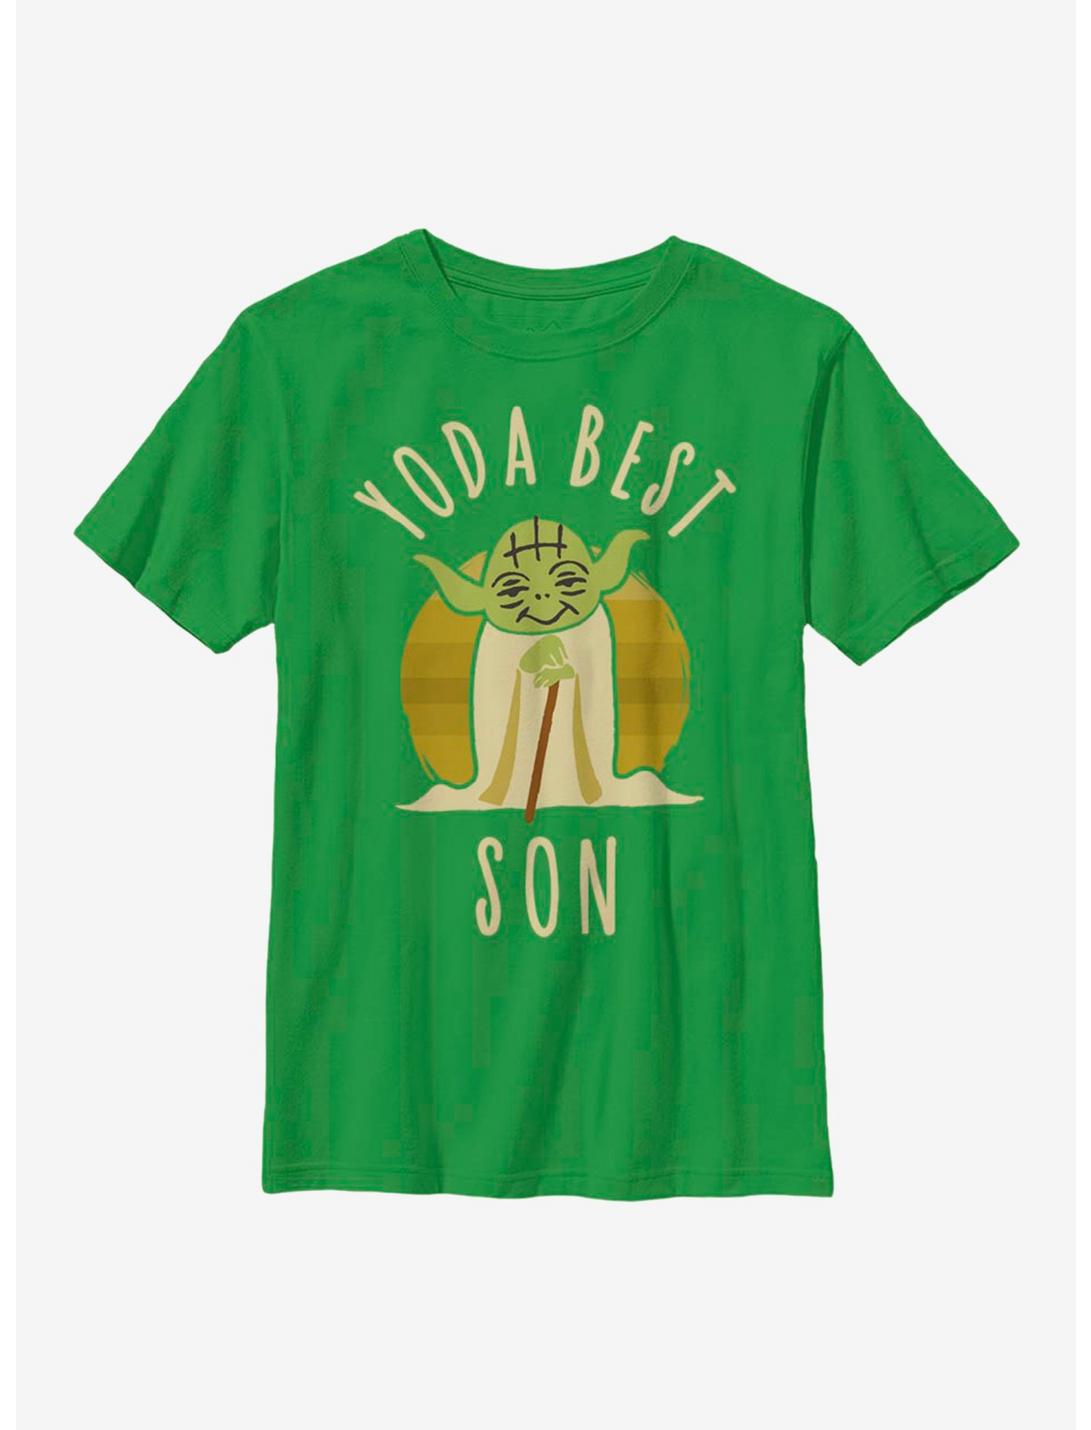 Star Wars Best Son Yoda Says Youth T-Shirt, KELLY, hi-res